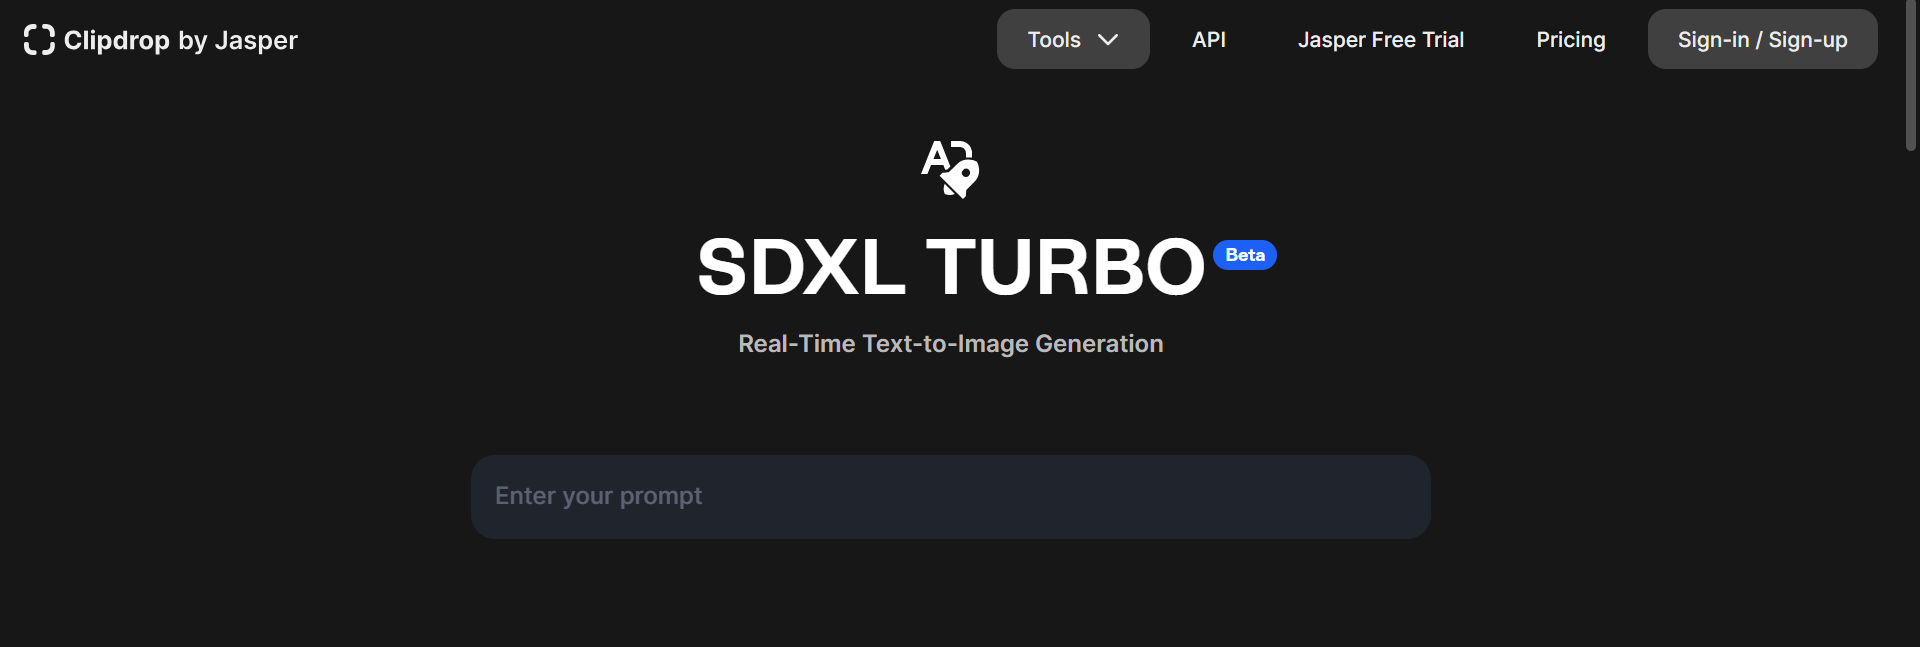 SDXL Turbo | Top Alternatives of DALL-E and Midjourney Image Generators